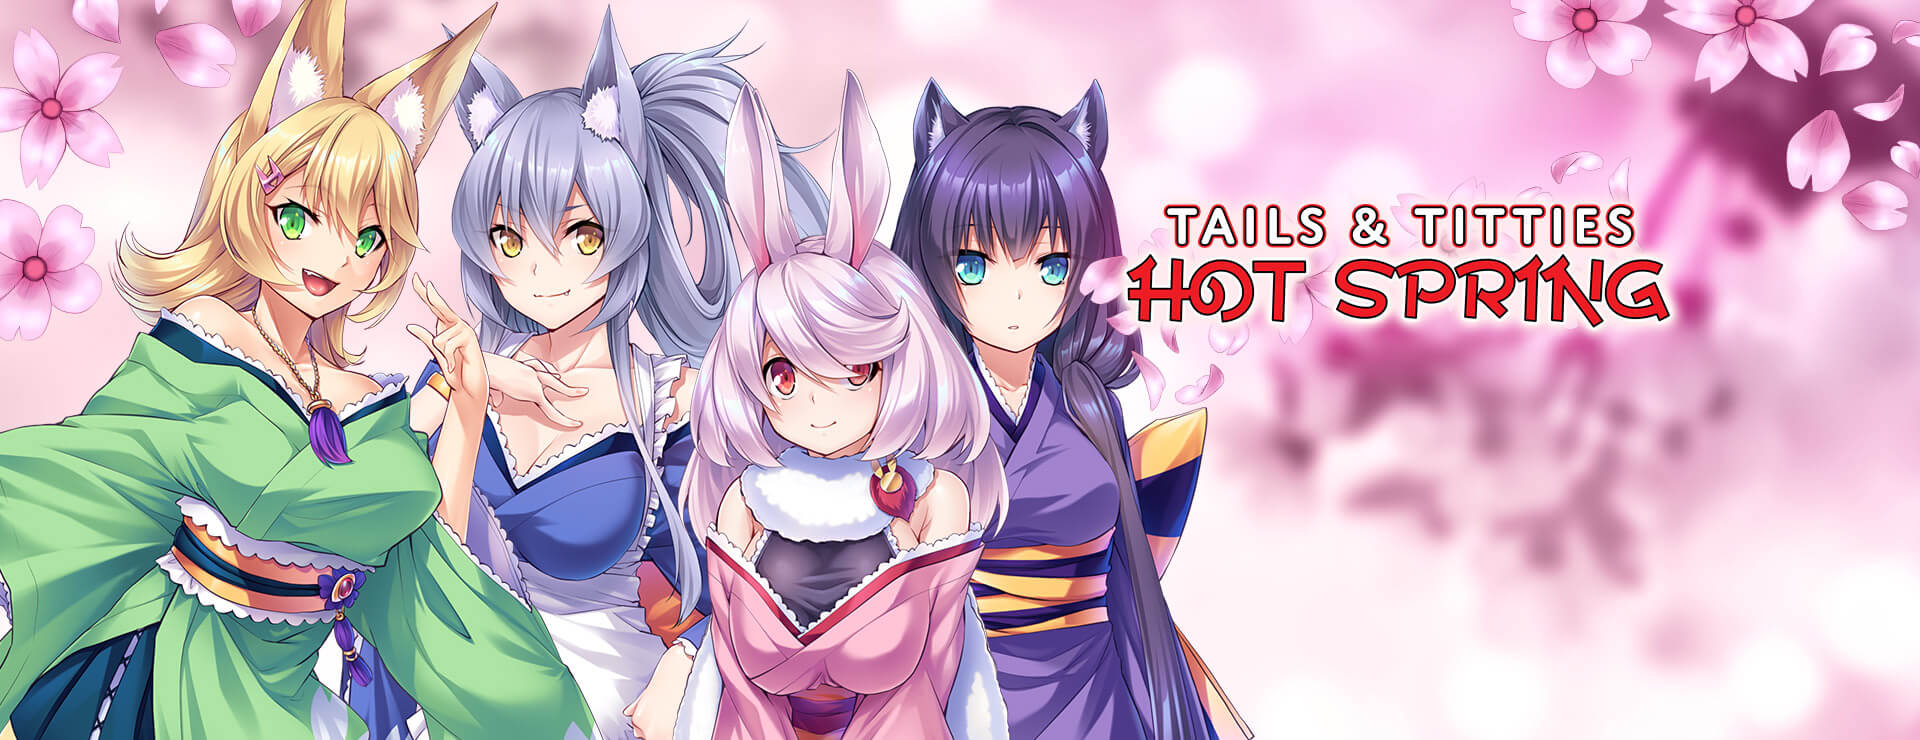 Tails & Titties Hot Spring - 虚拟小说 遊戲